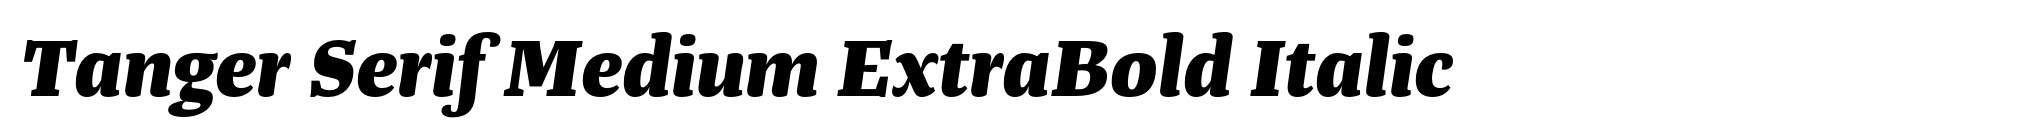 Tanger Serif Medium ExtraBold Italic image